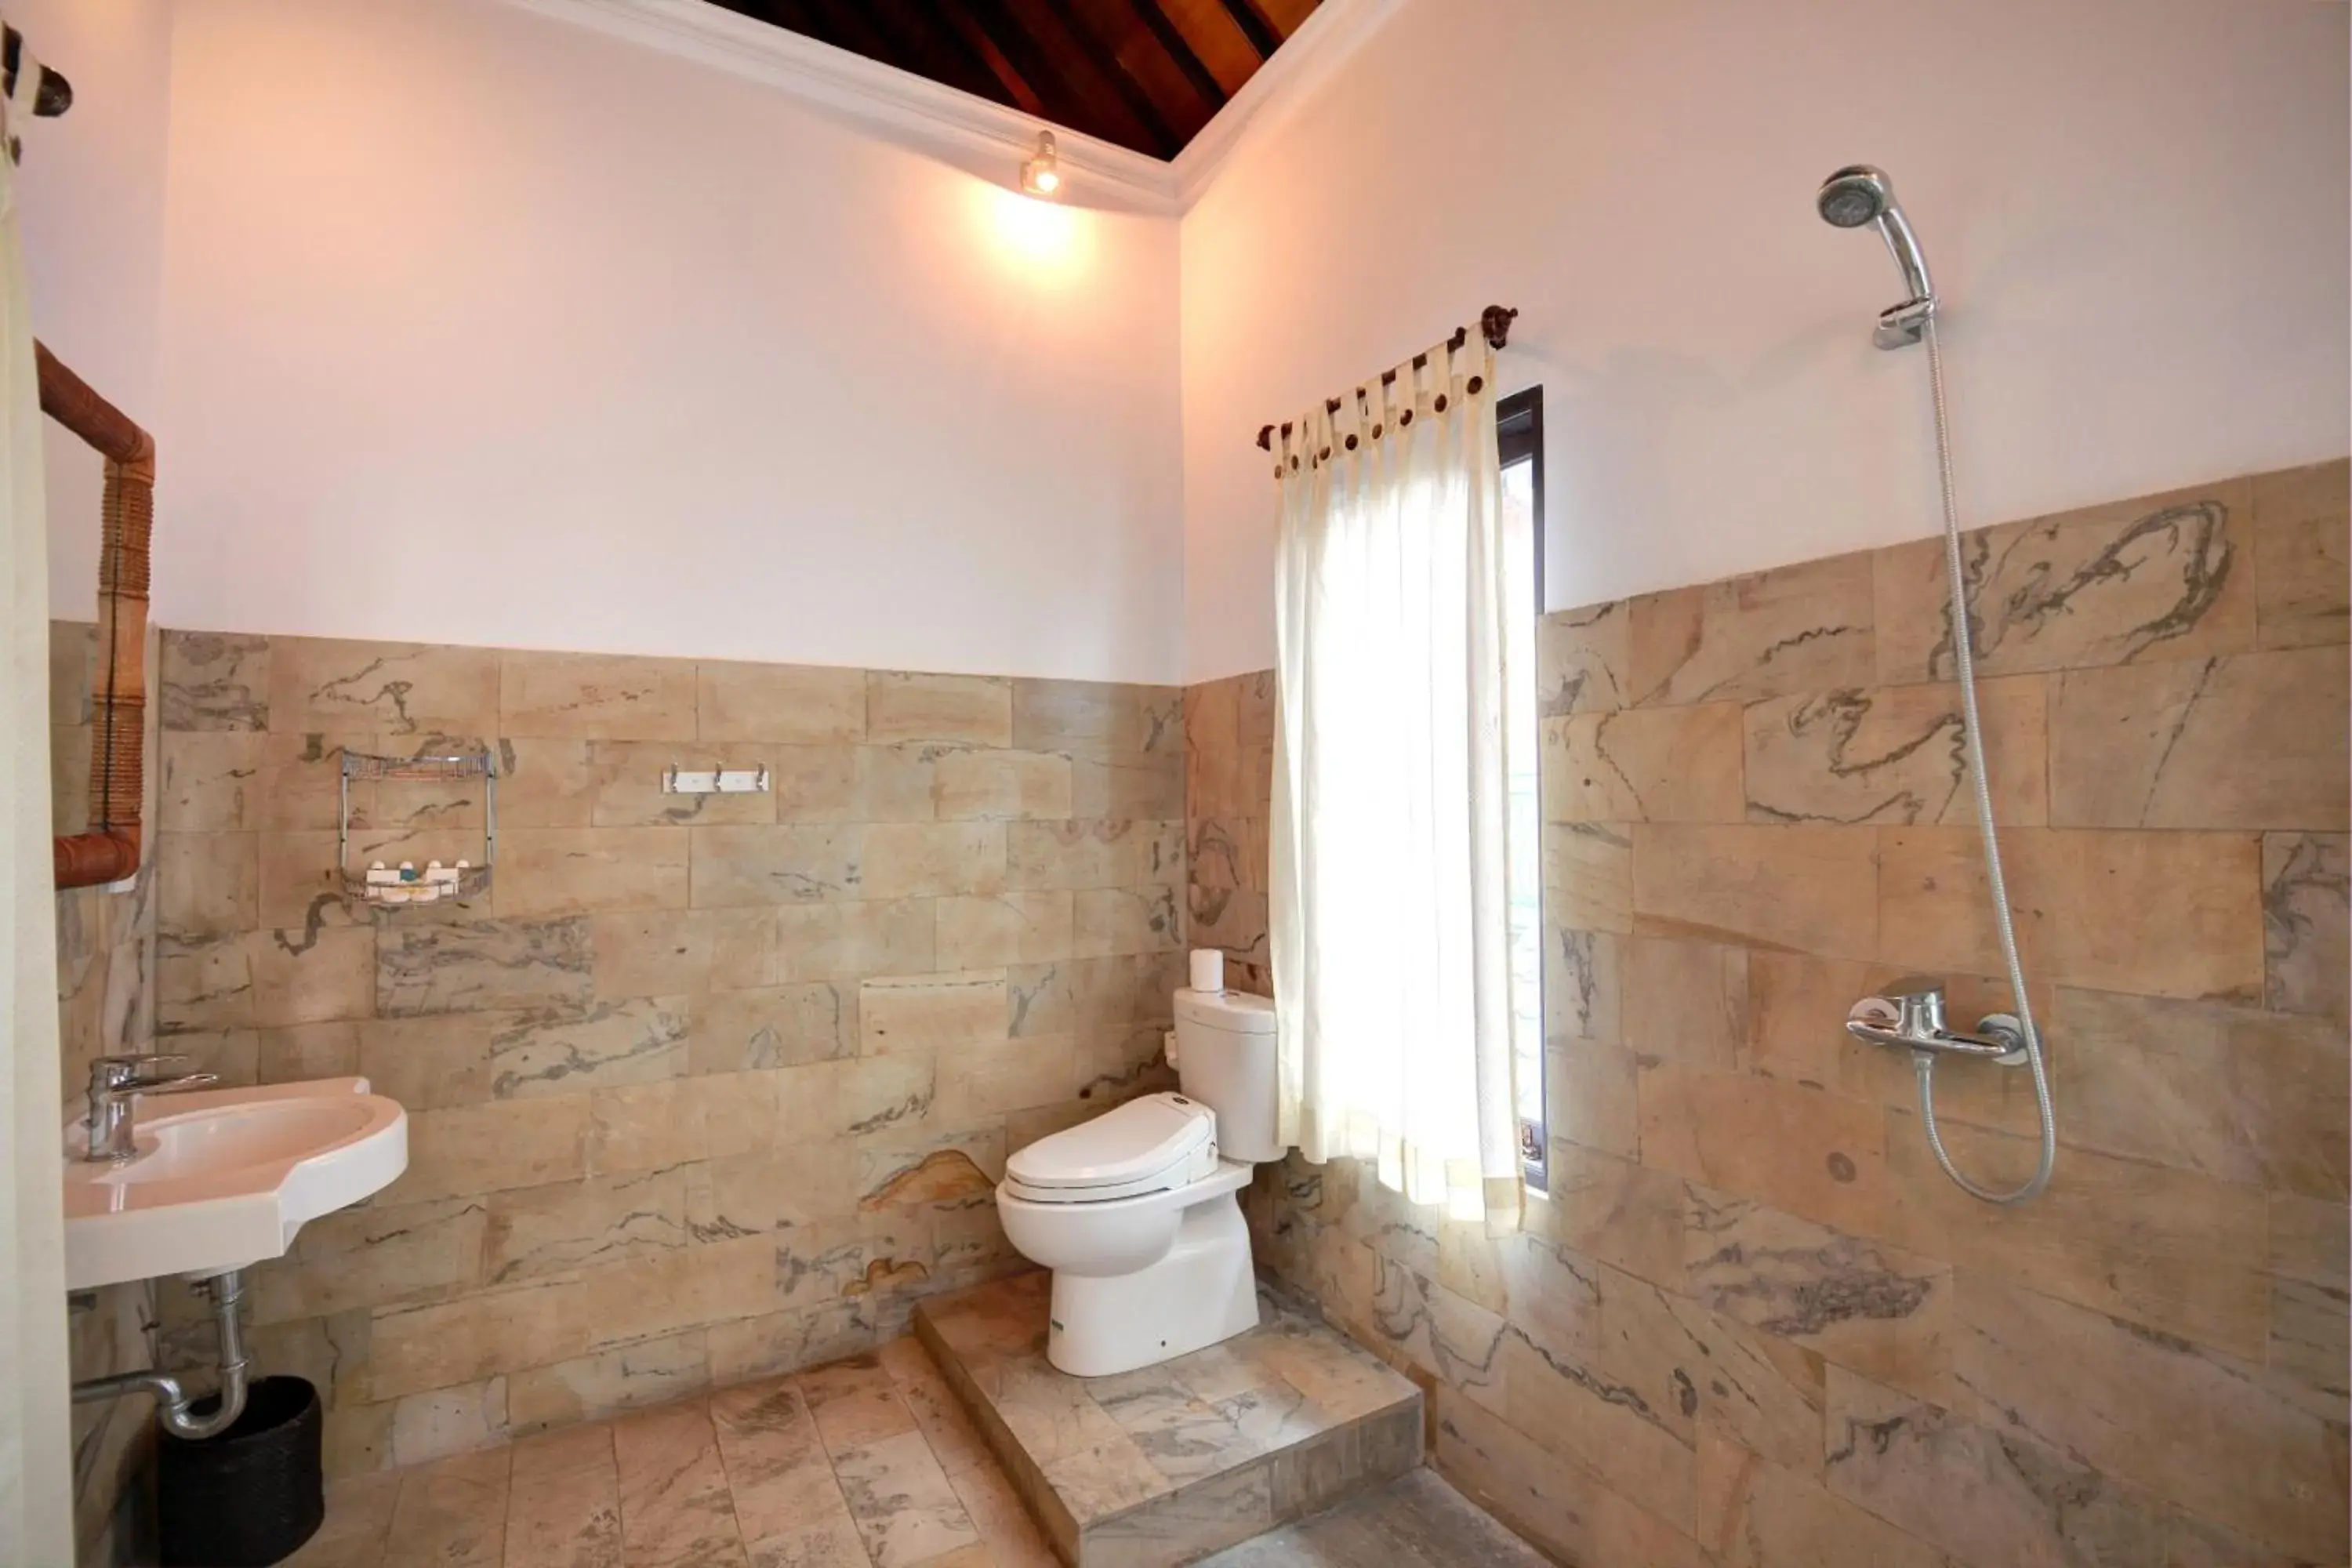 Bathroom in Bali Dream Resort Ubud by Mahaputra